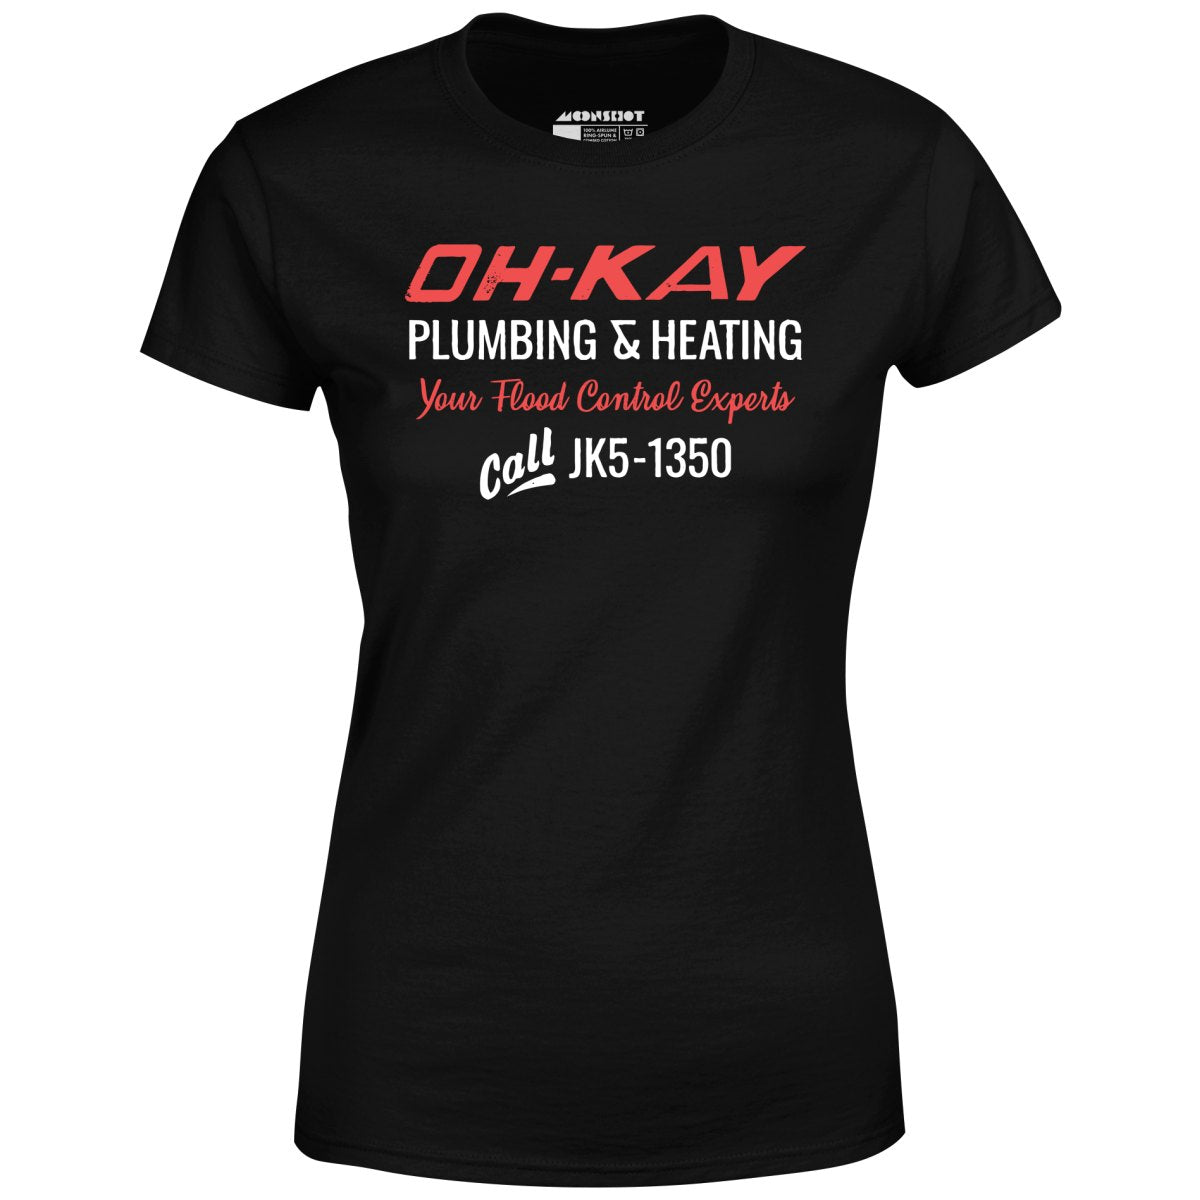 Oh-Kay Plumbing & Heating - Women's T-Shirt